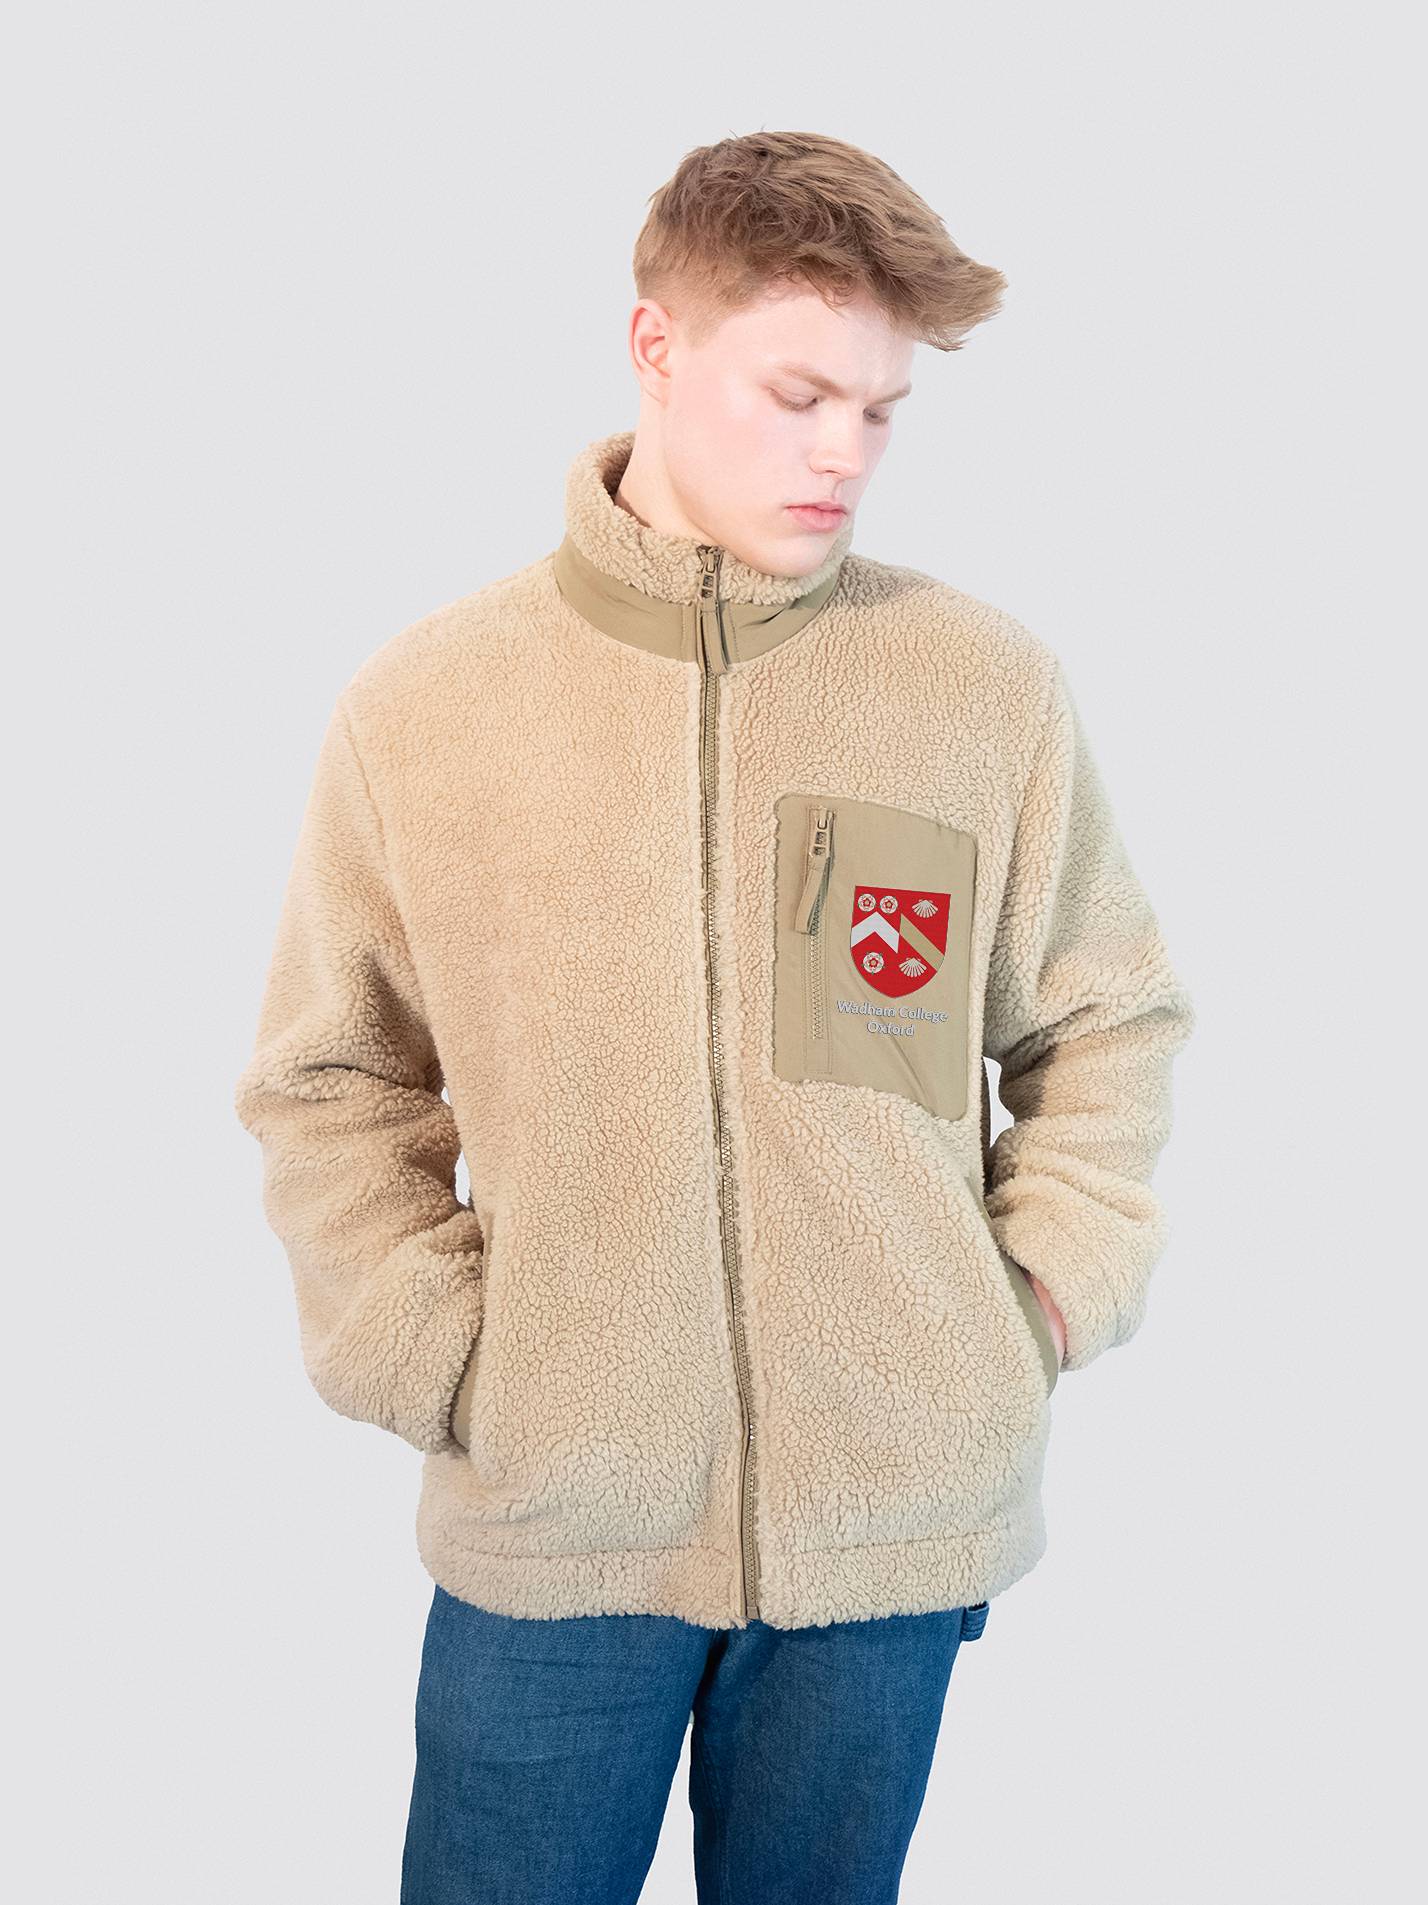 Wadham College Oxford Unisex Deep-Pile Sherpa Fleece Jacket